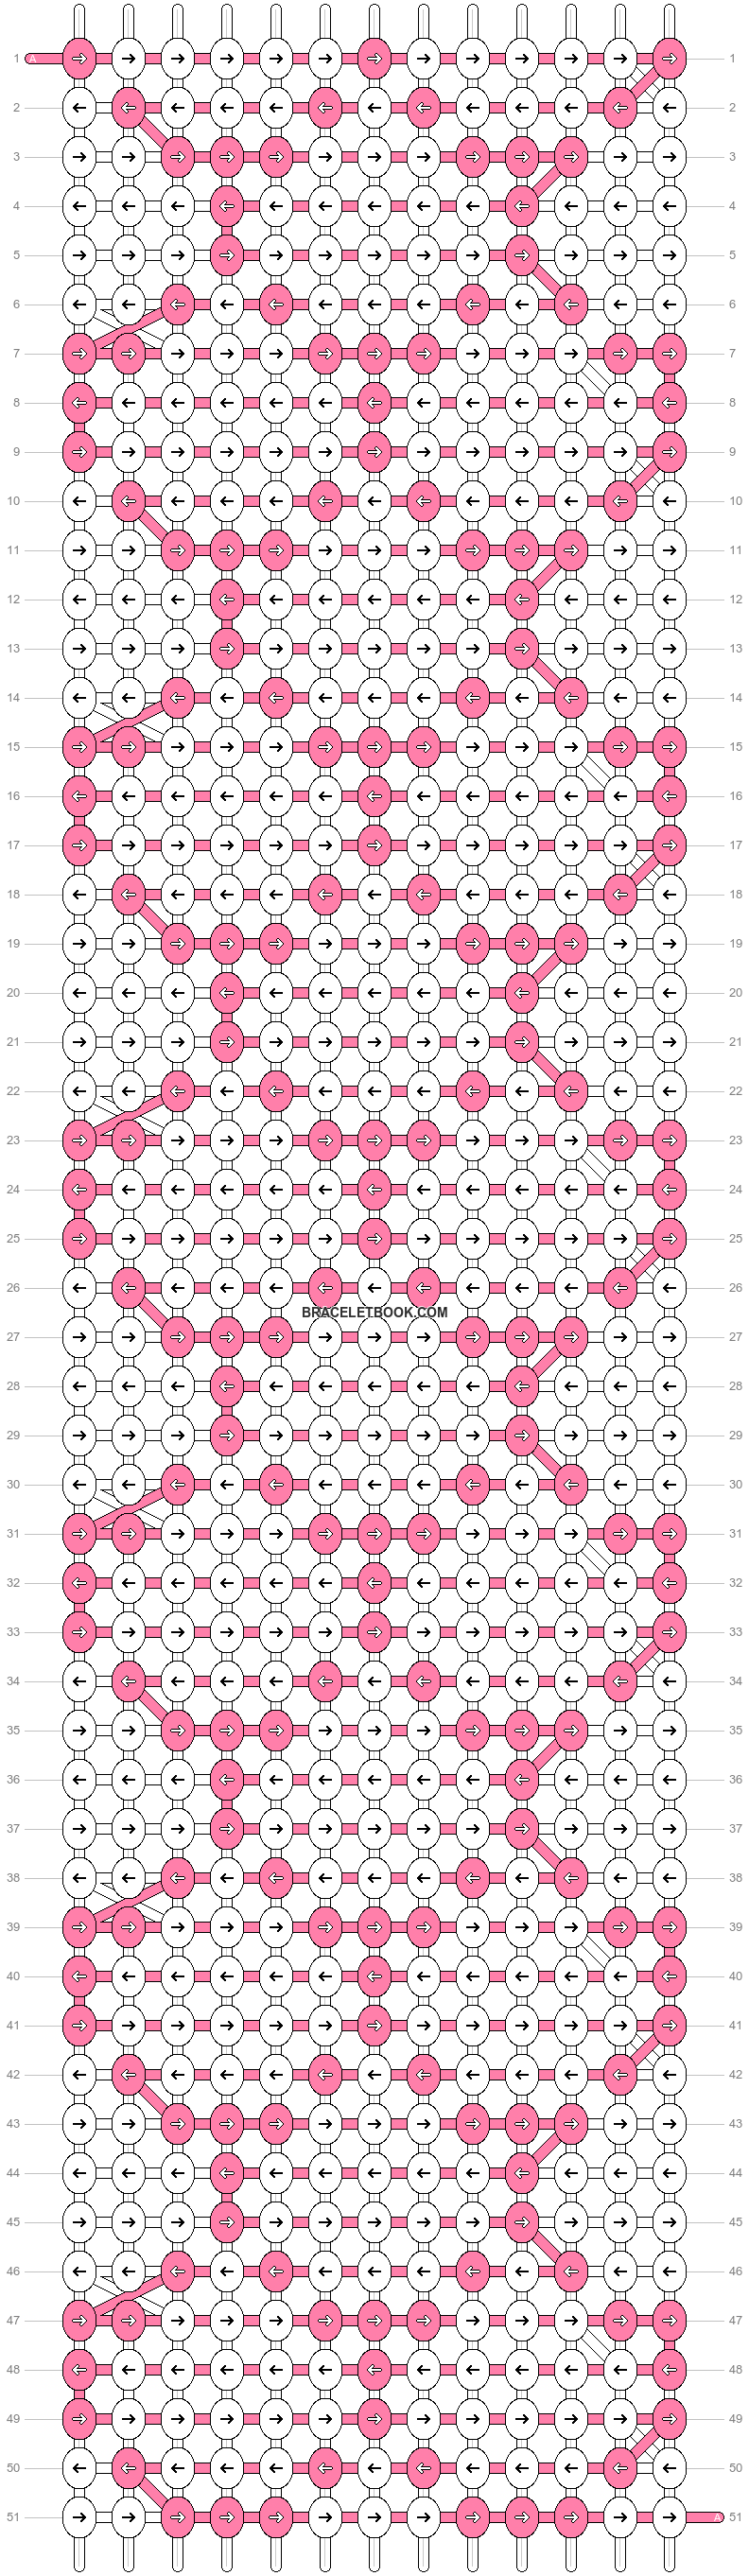 Alpha pattern #15085 variation #41388 pattern